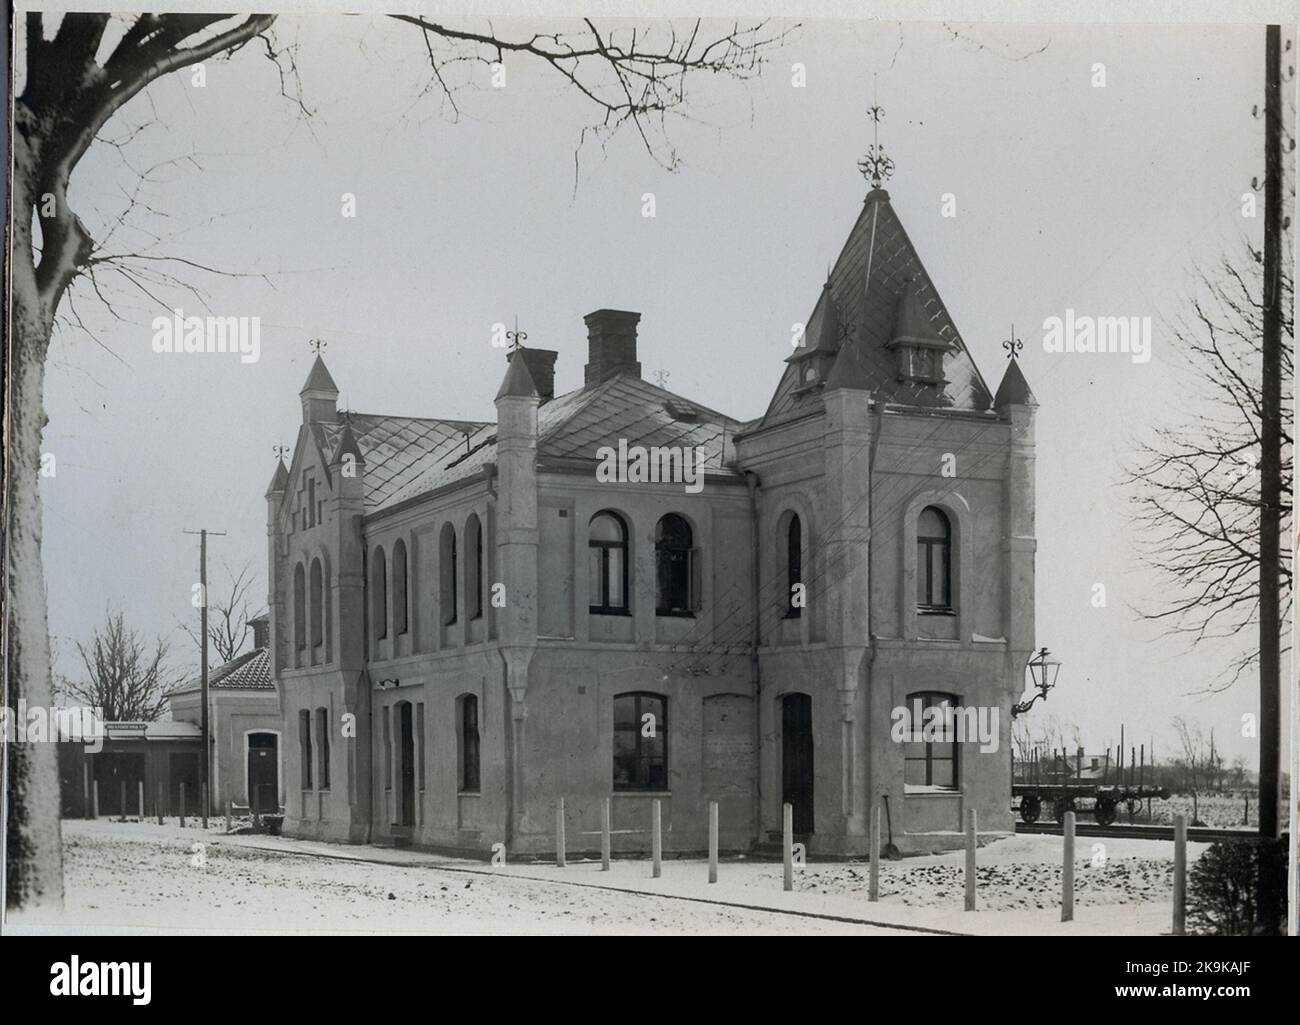 The station house in Harplinge. Stock Photo